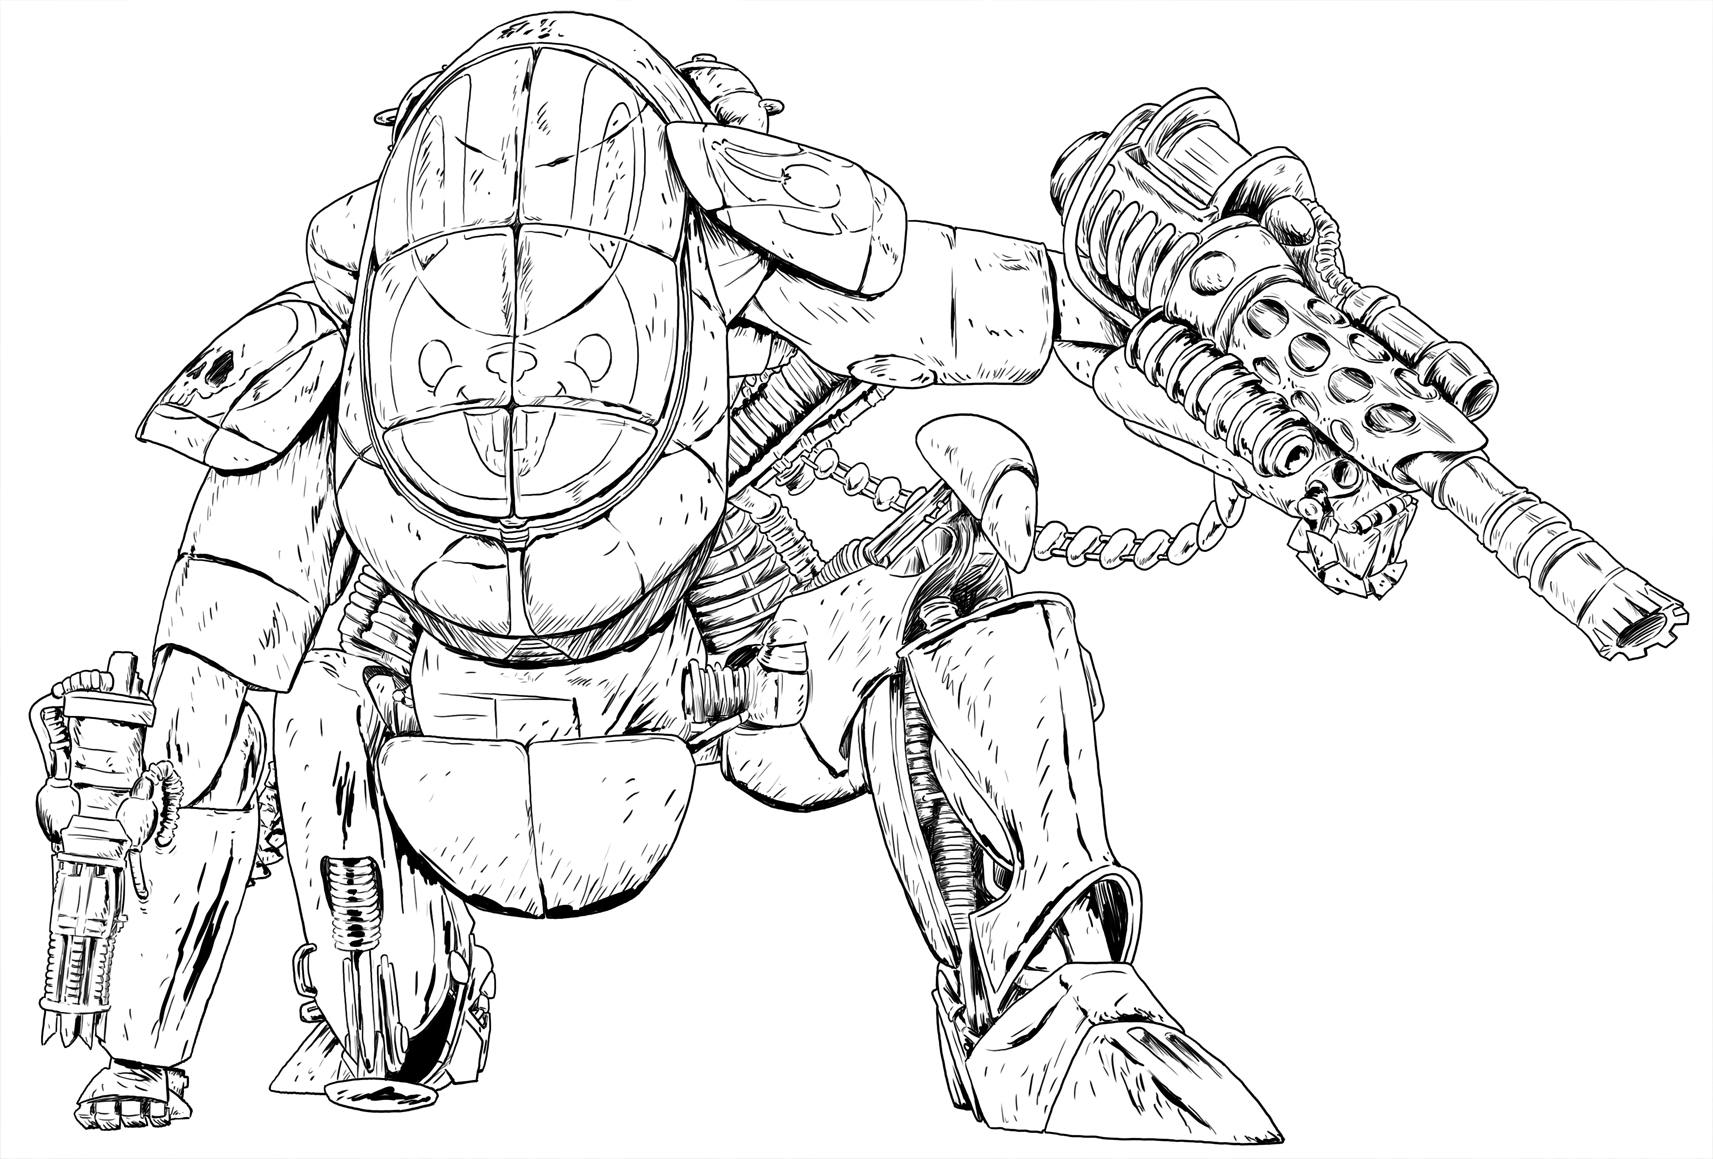 An illustration of a mech droid